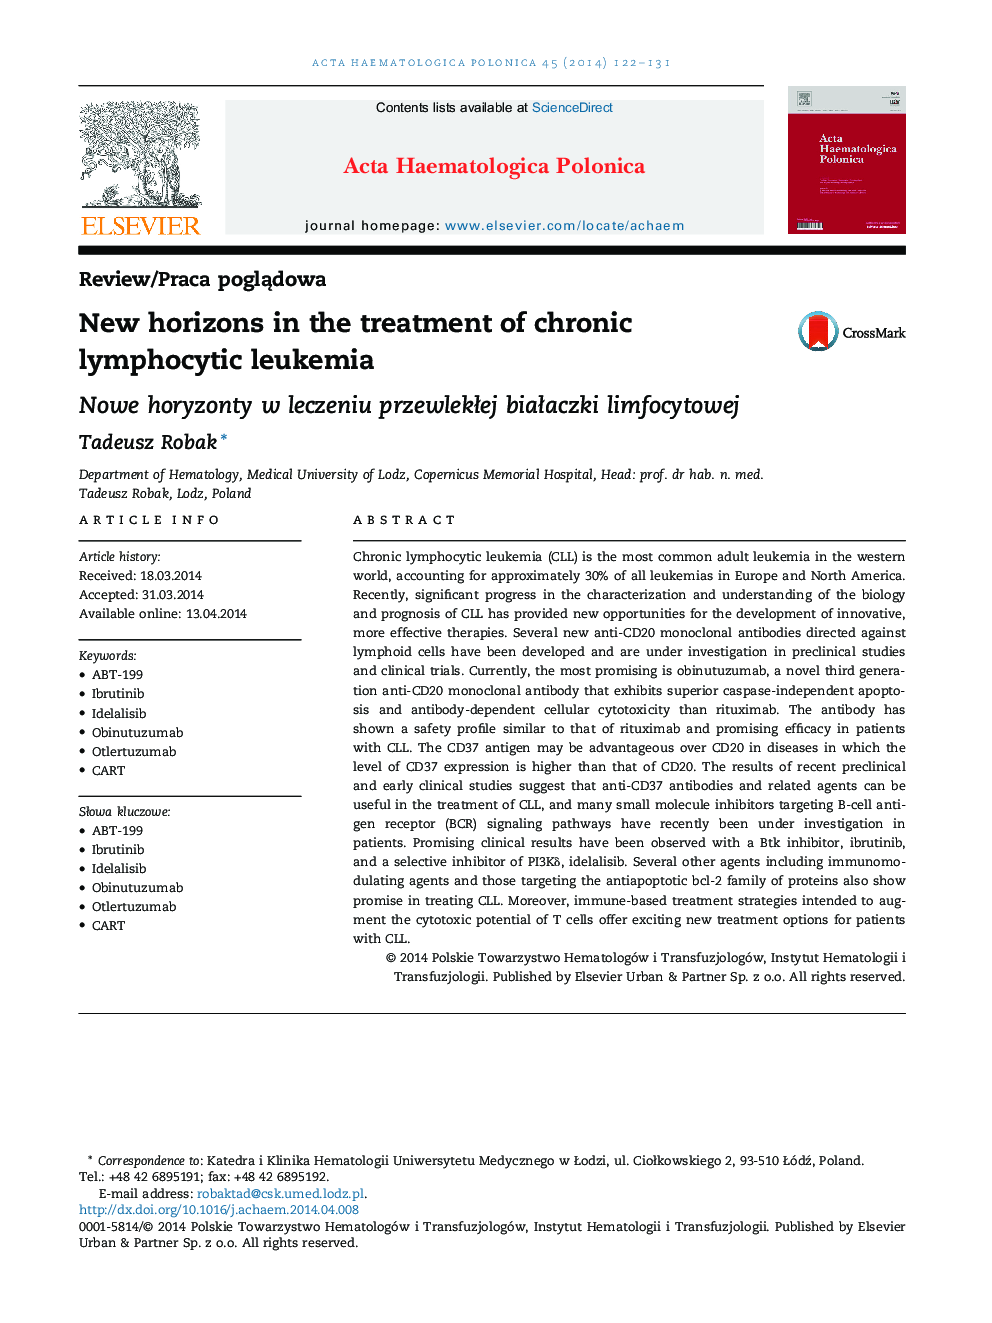 New horizons in the treatment of chronic lymphocytic leukemia